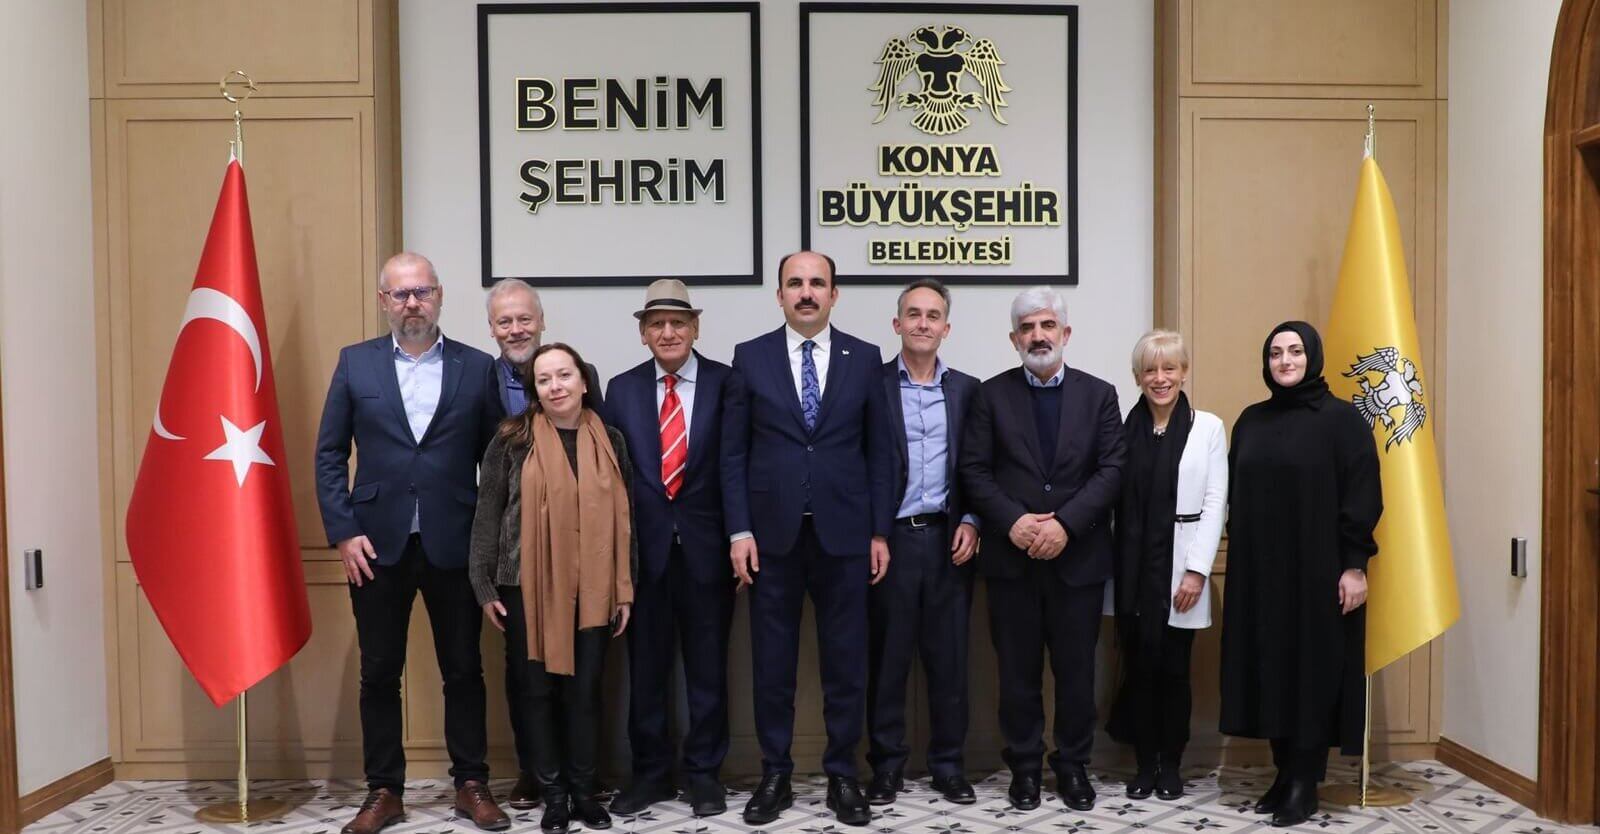 Meeting the Mayor of Konya, Turkey